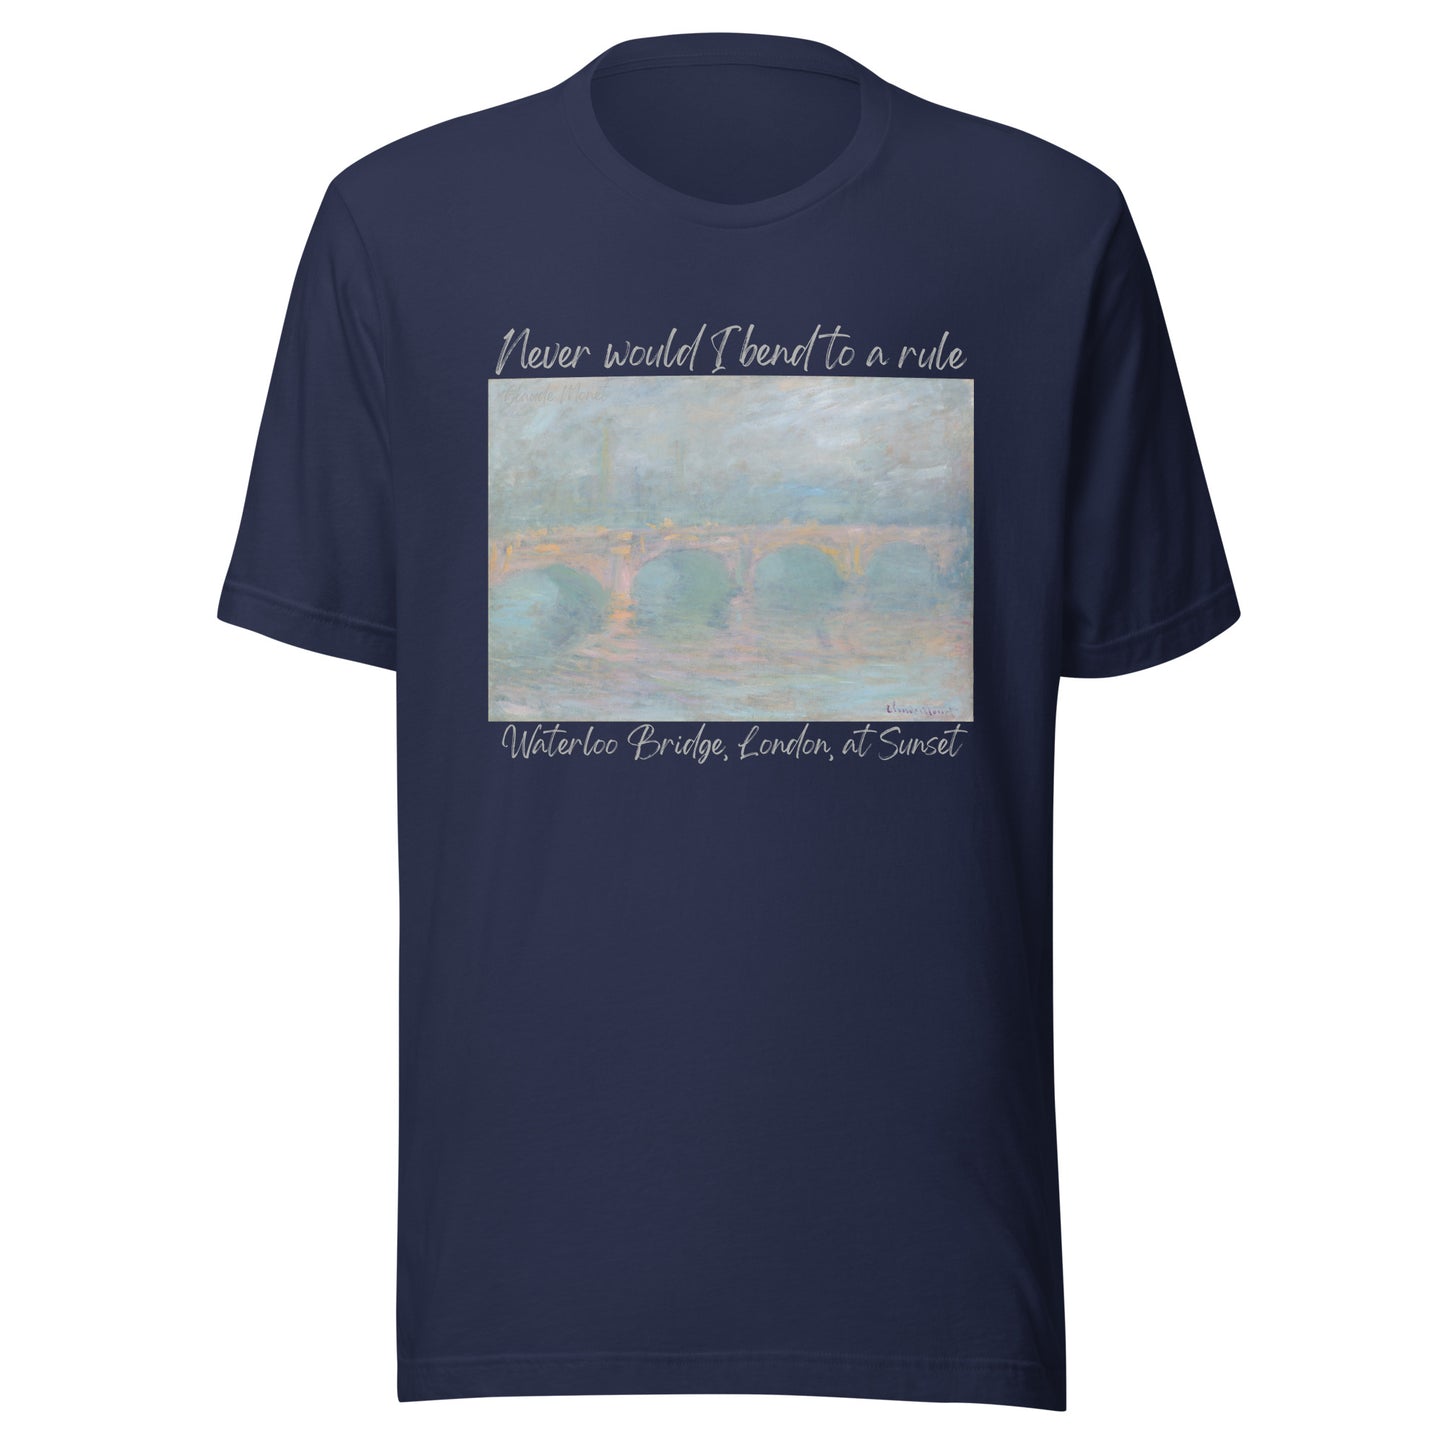 Unisex t-shirt Claude Monet, Waterloo Bridge, London, at Sunset